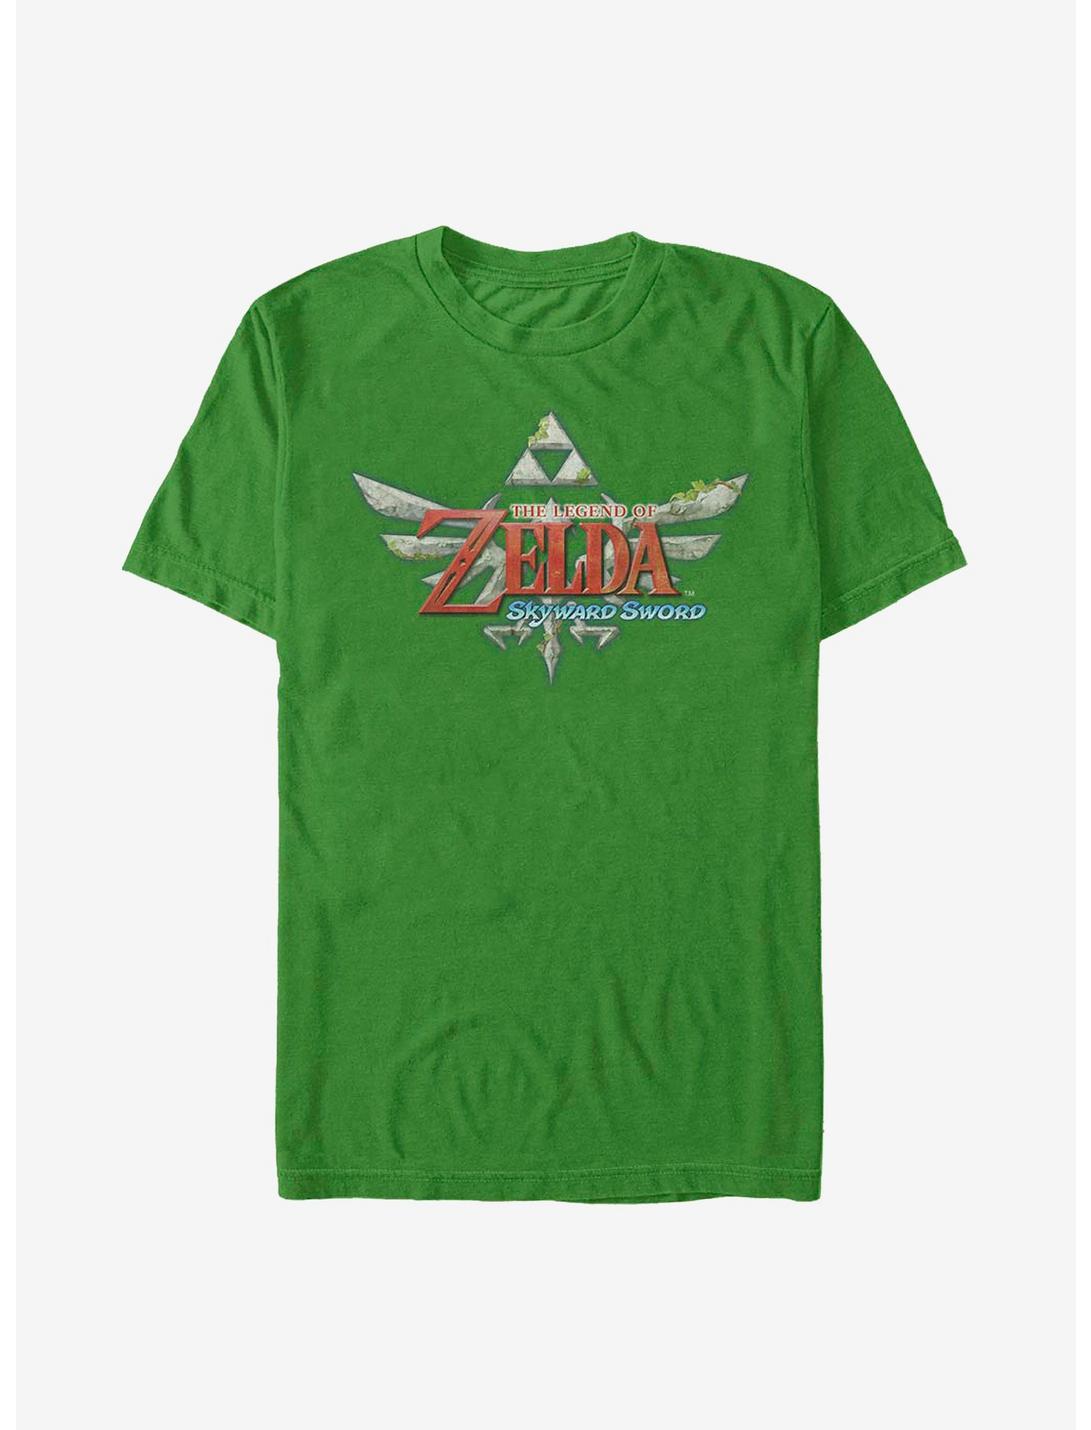 Nintendo Zelda Skyward T-Shirt, KELLY, hi-res